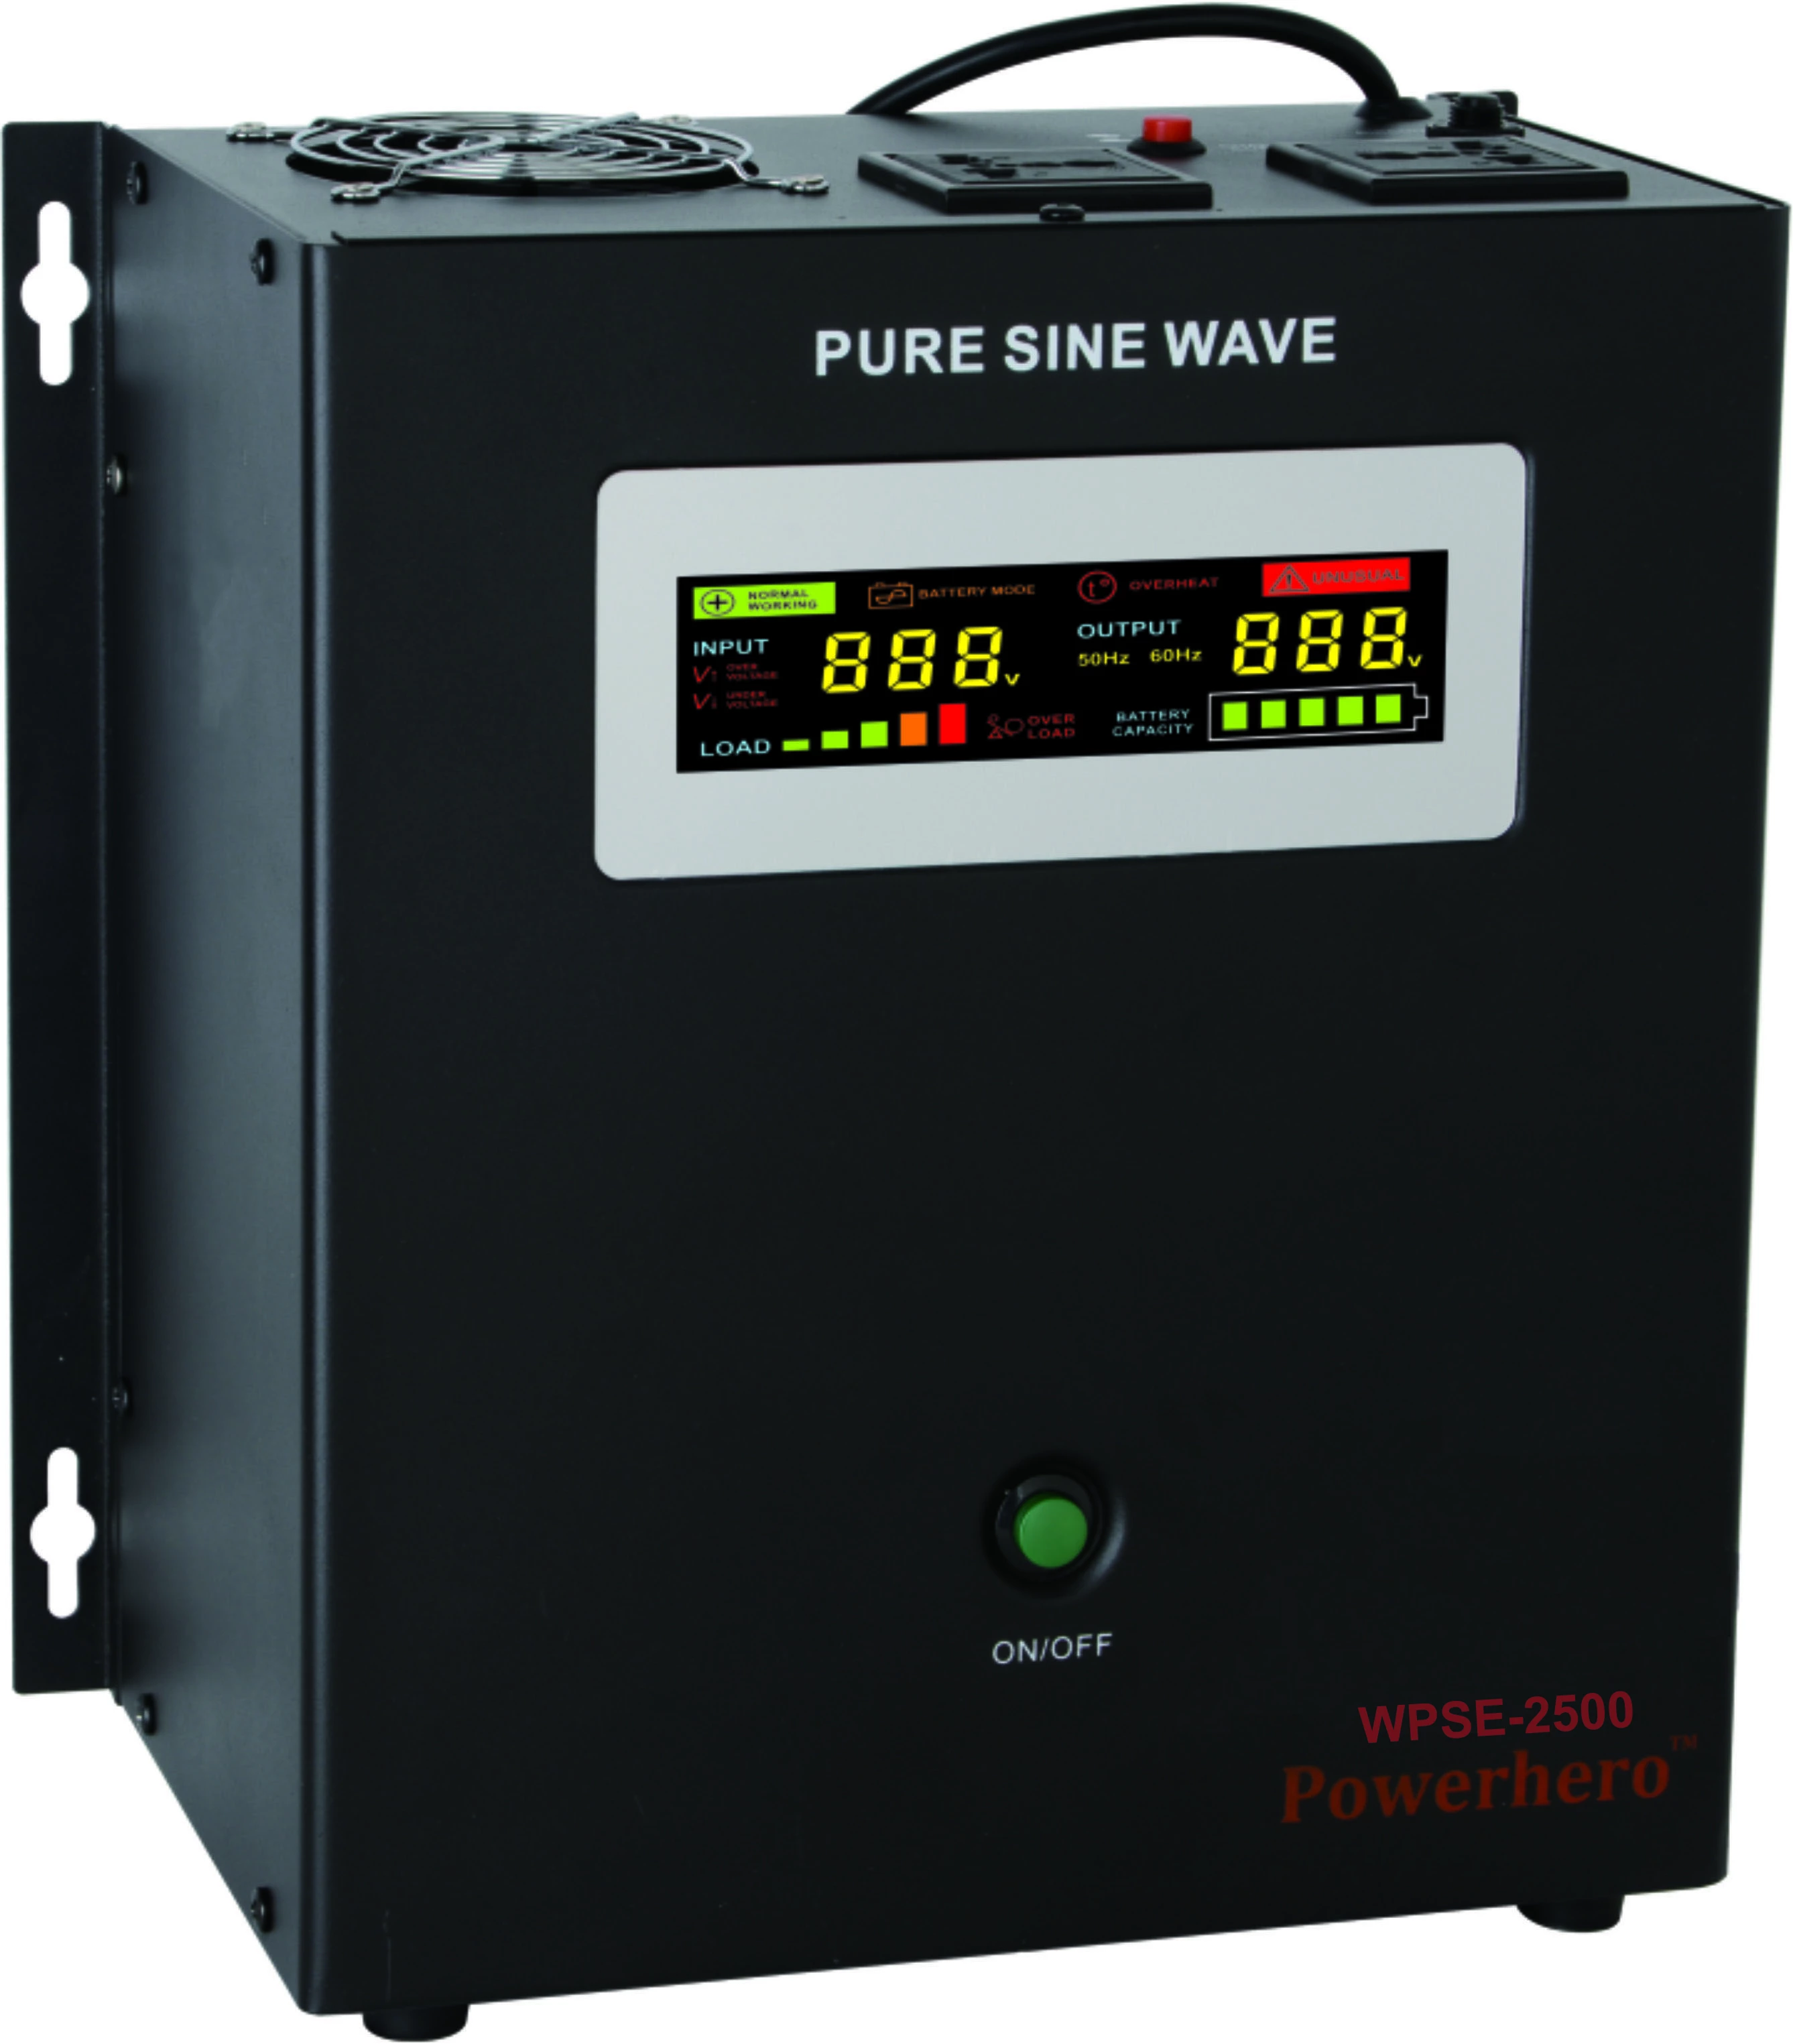 WPSE-2500 Wall type pure sine wave inverter 1